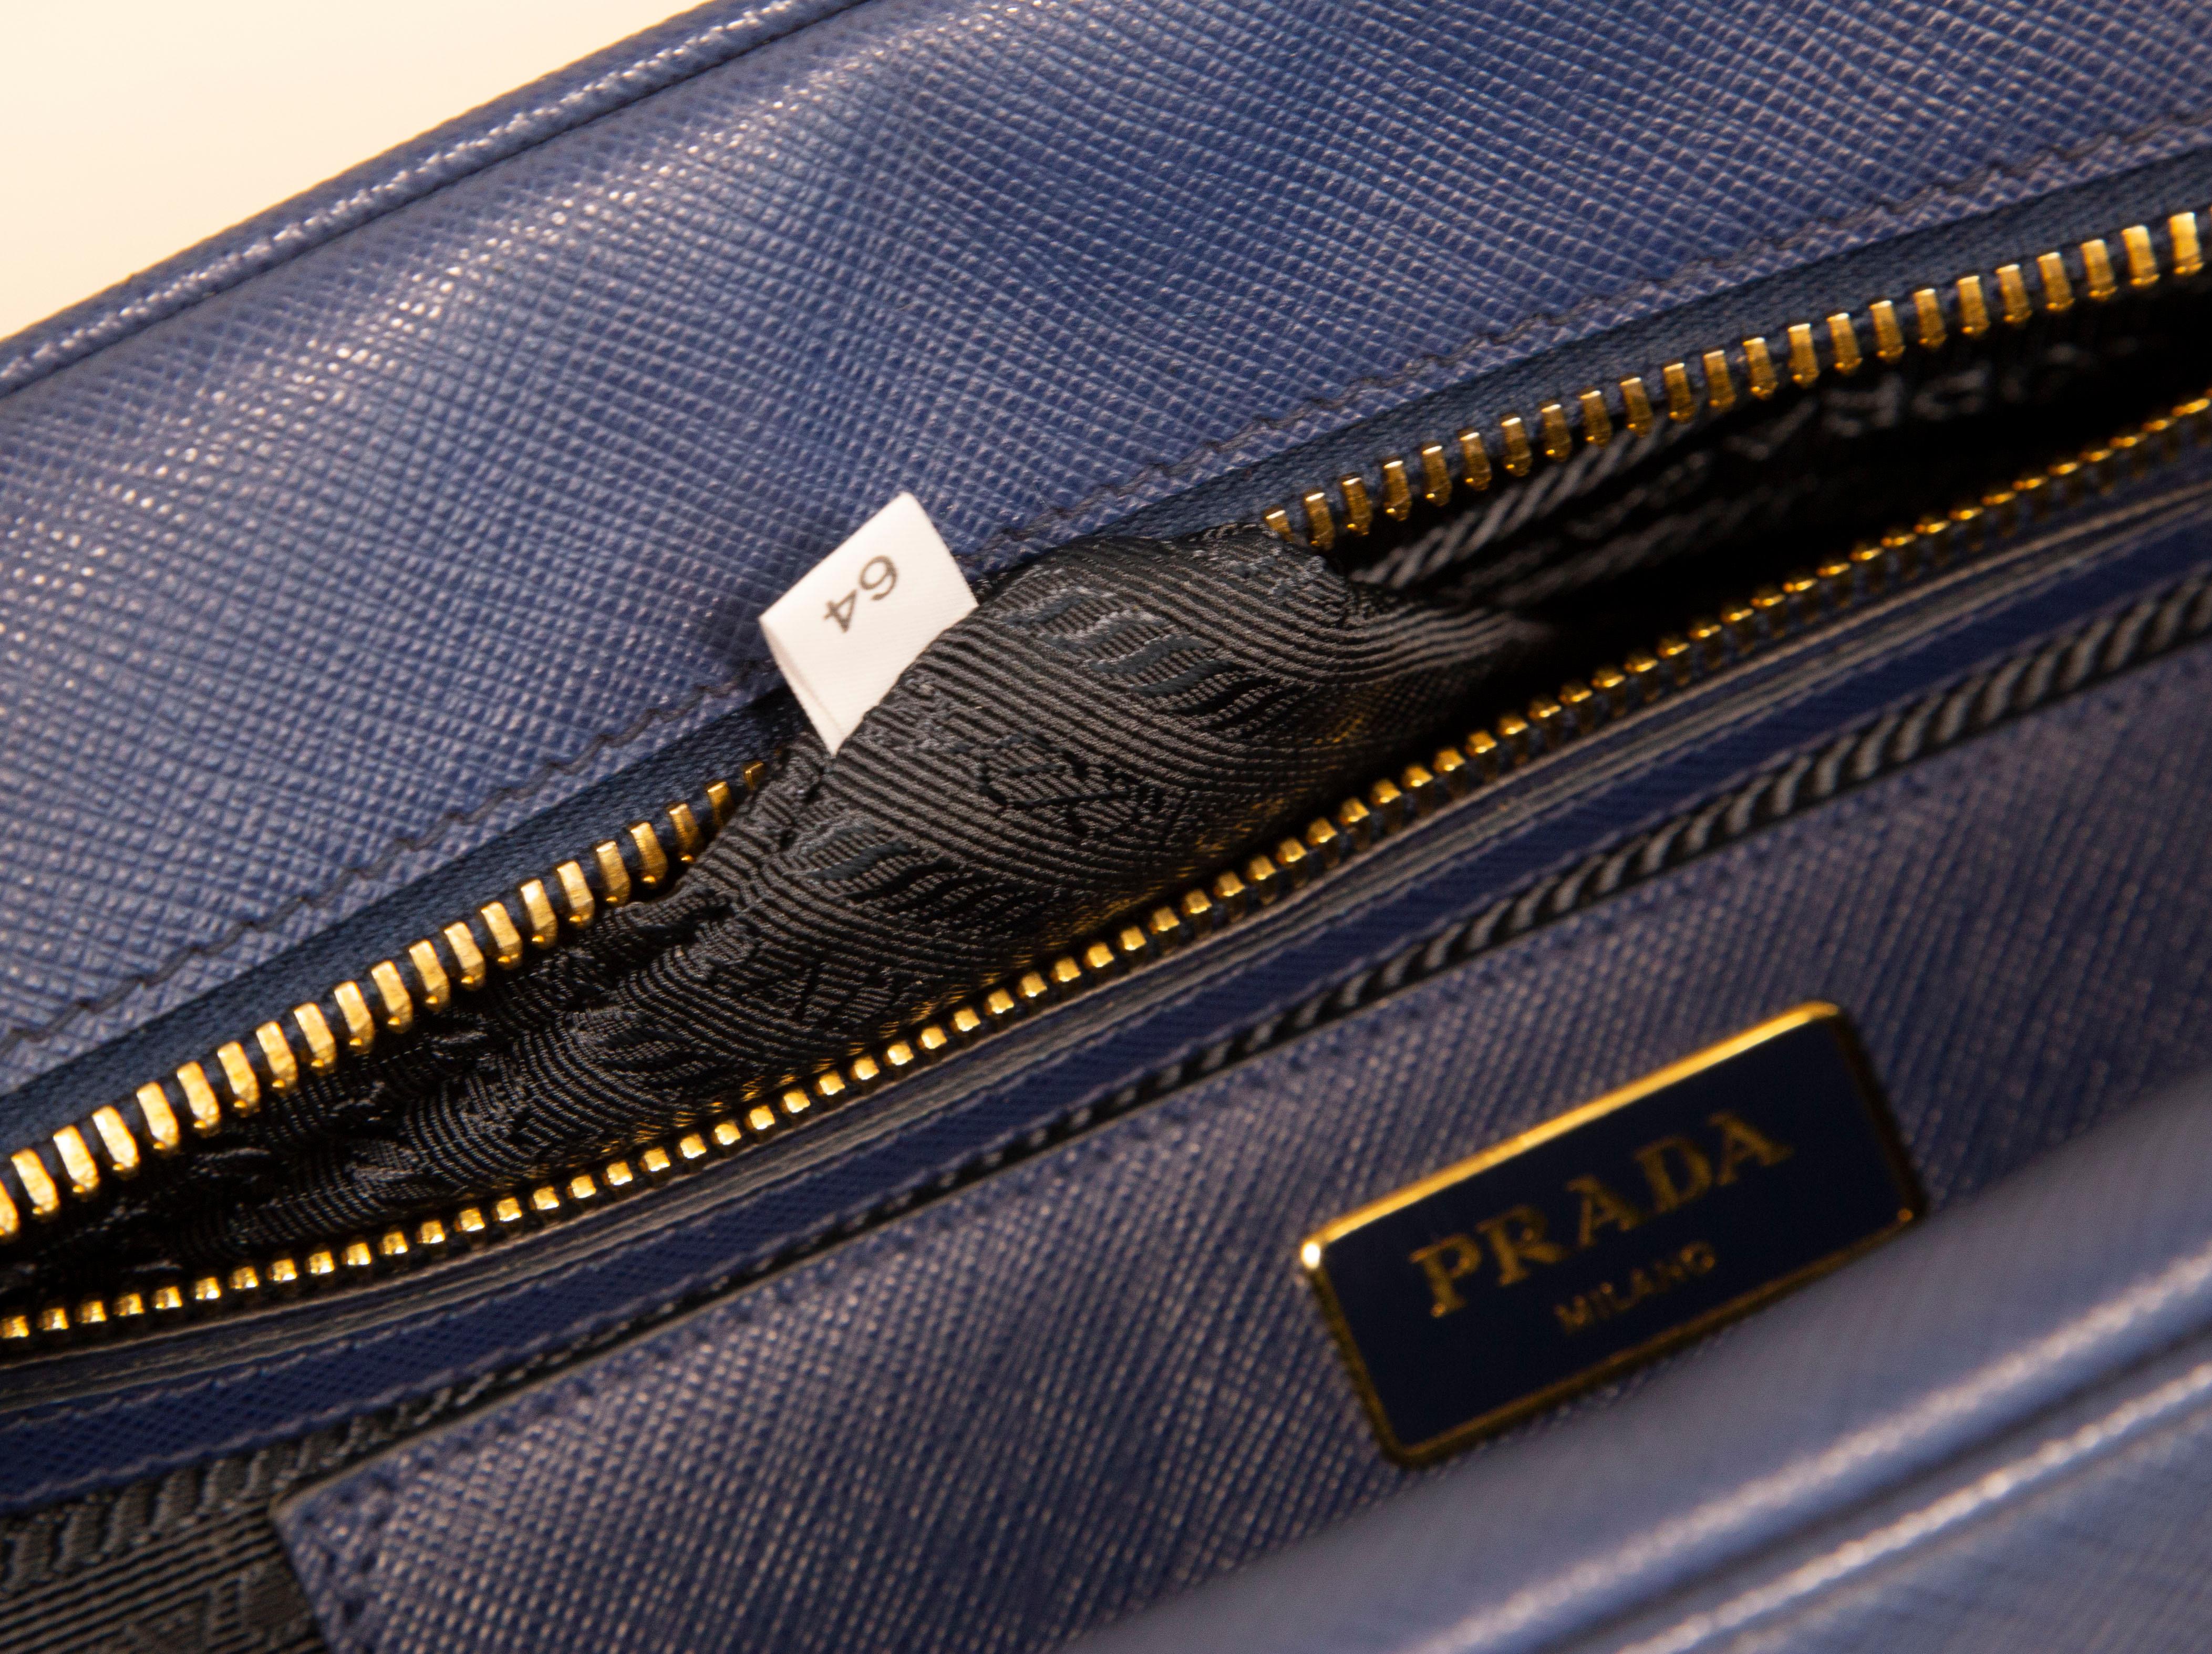  Prada Galleria Two Way Bag in Blue Saffiano Leather 16